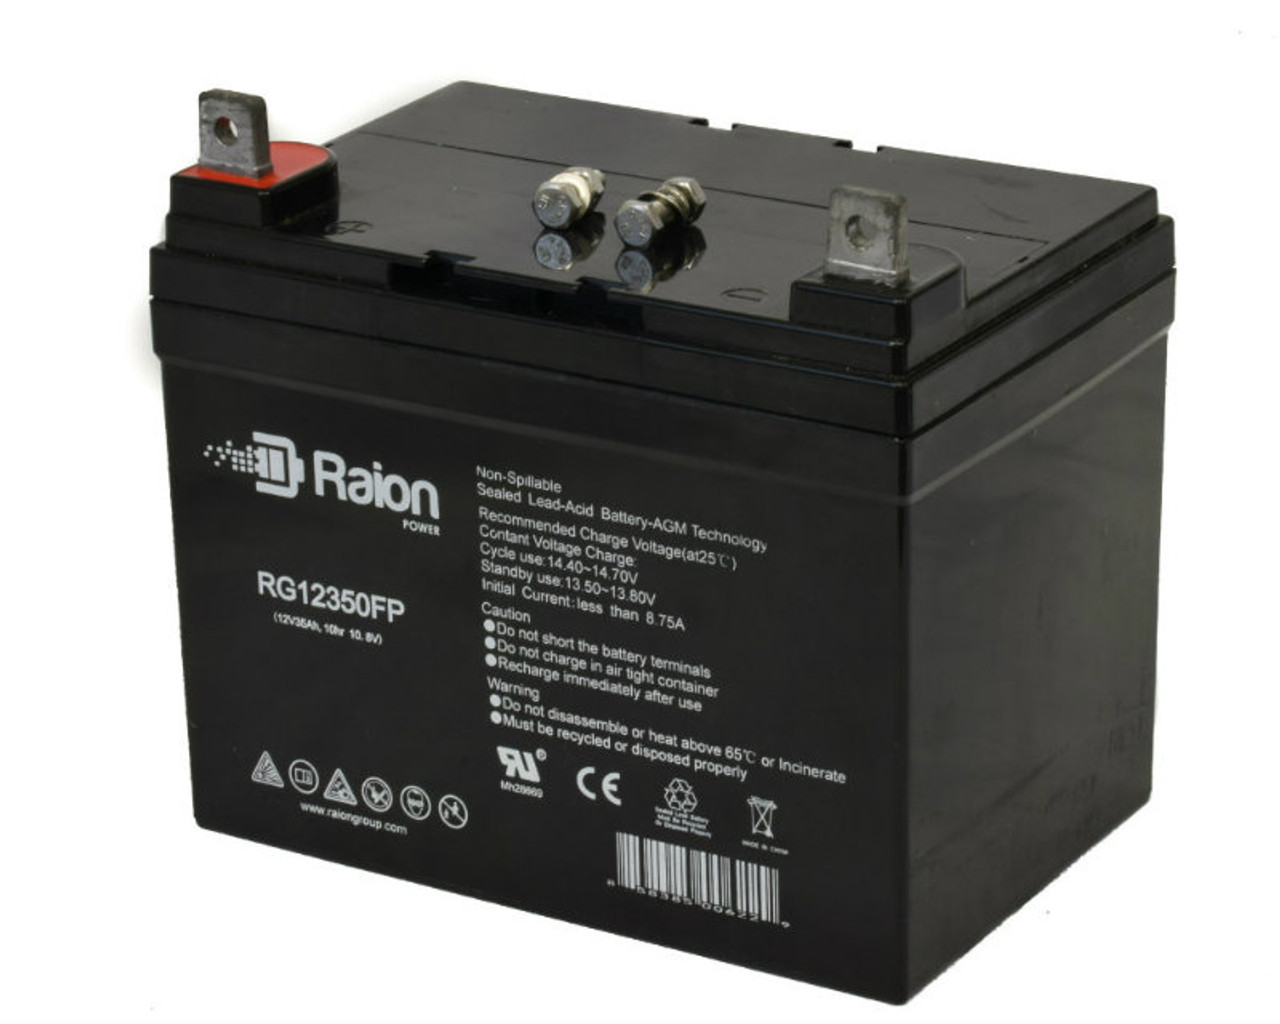 Raion Power Replacement 12V 35Ah RG12350FP Battery for Hustler WALK BEHIND